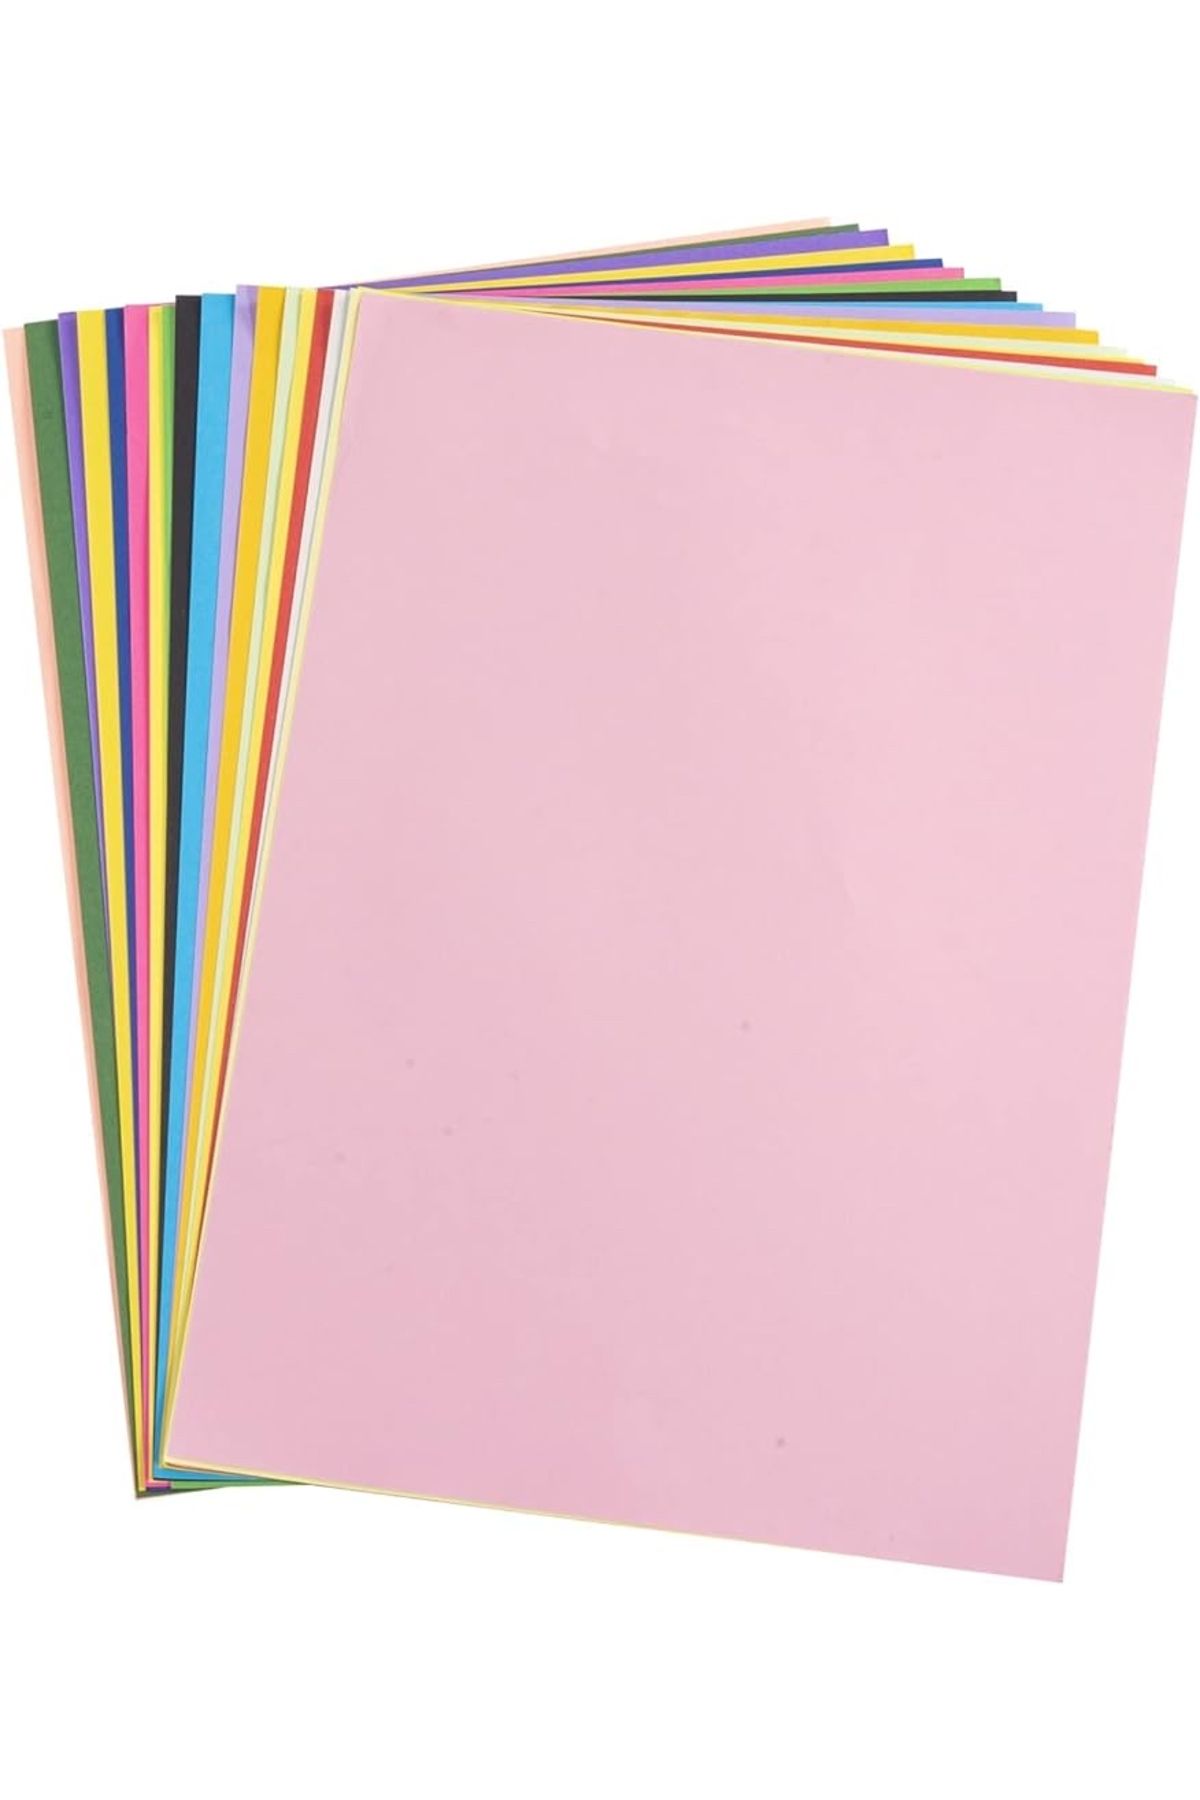 Xerox Renkli Fotokopi Kağıdı 500 Adet 80 Gr.